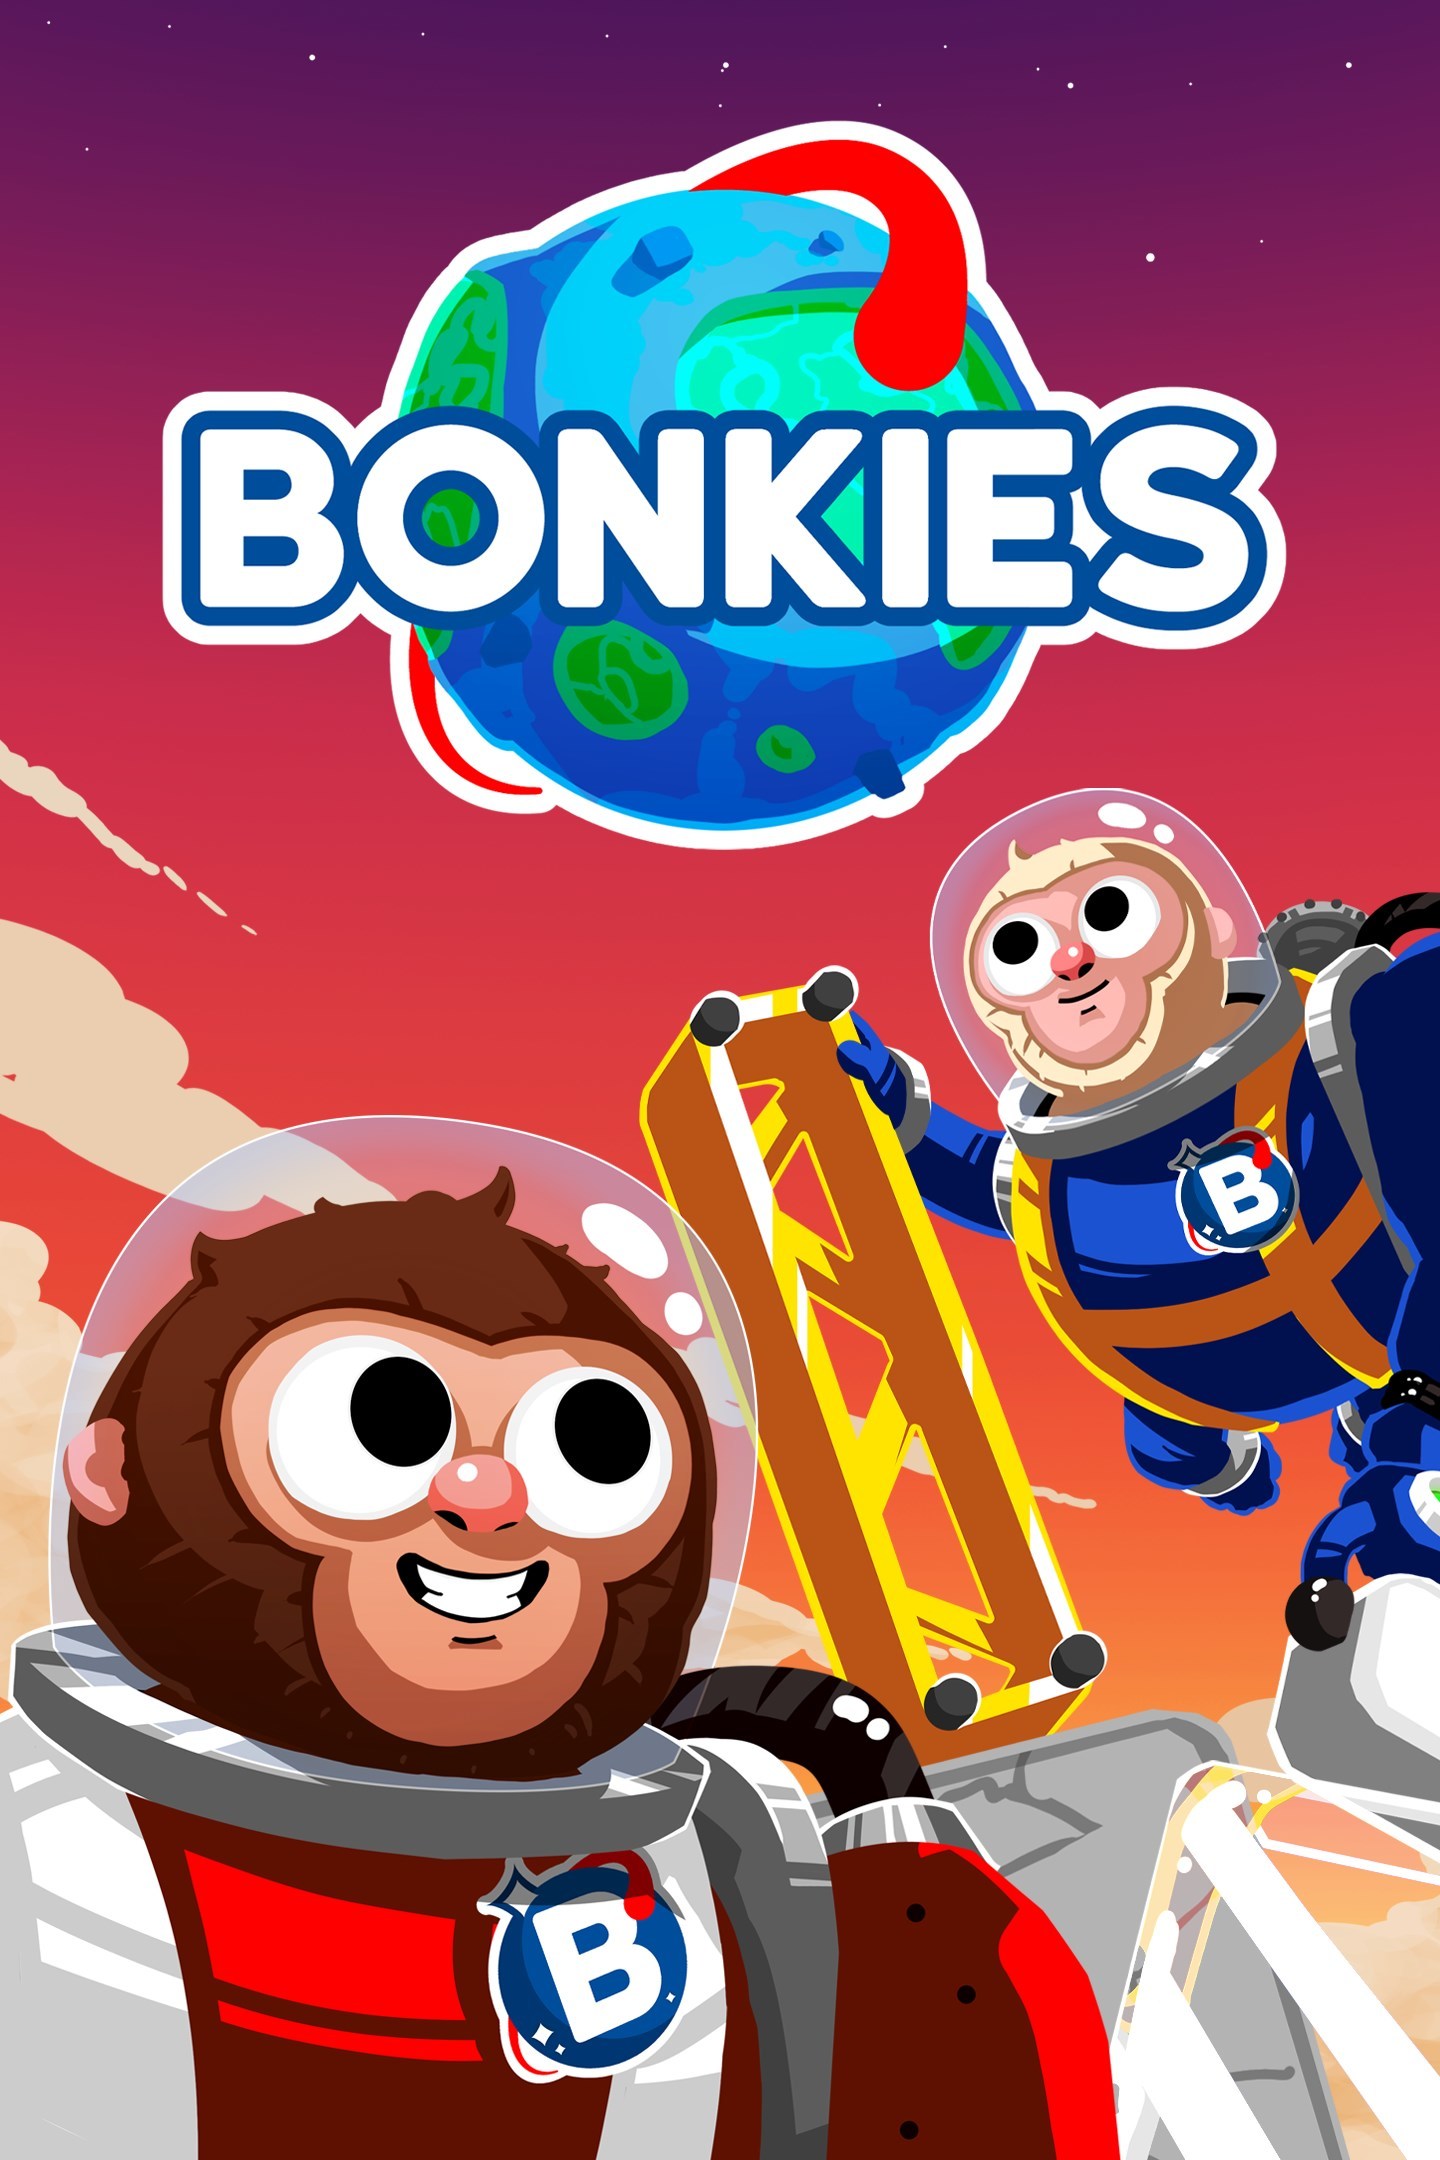 Bonkies